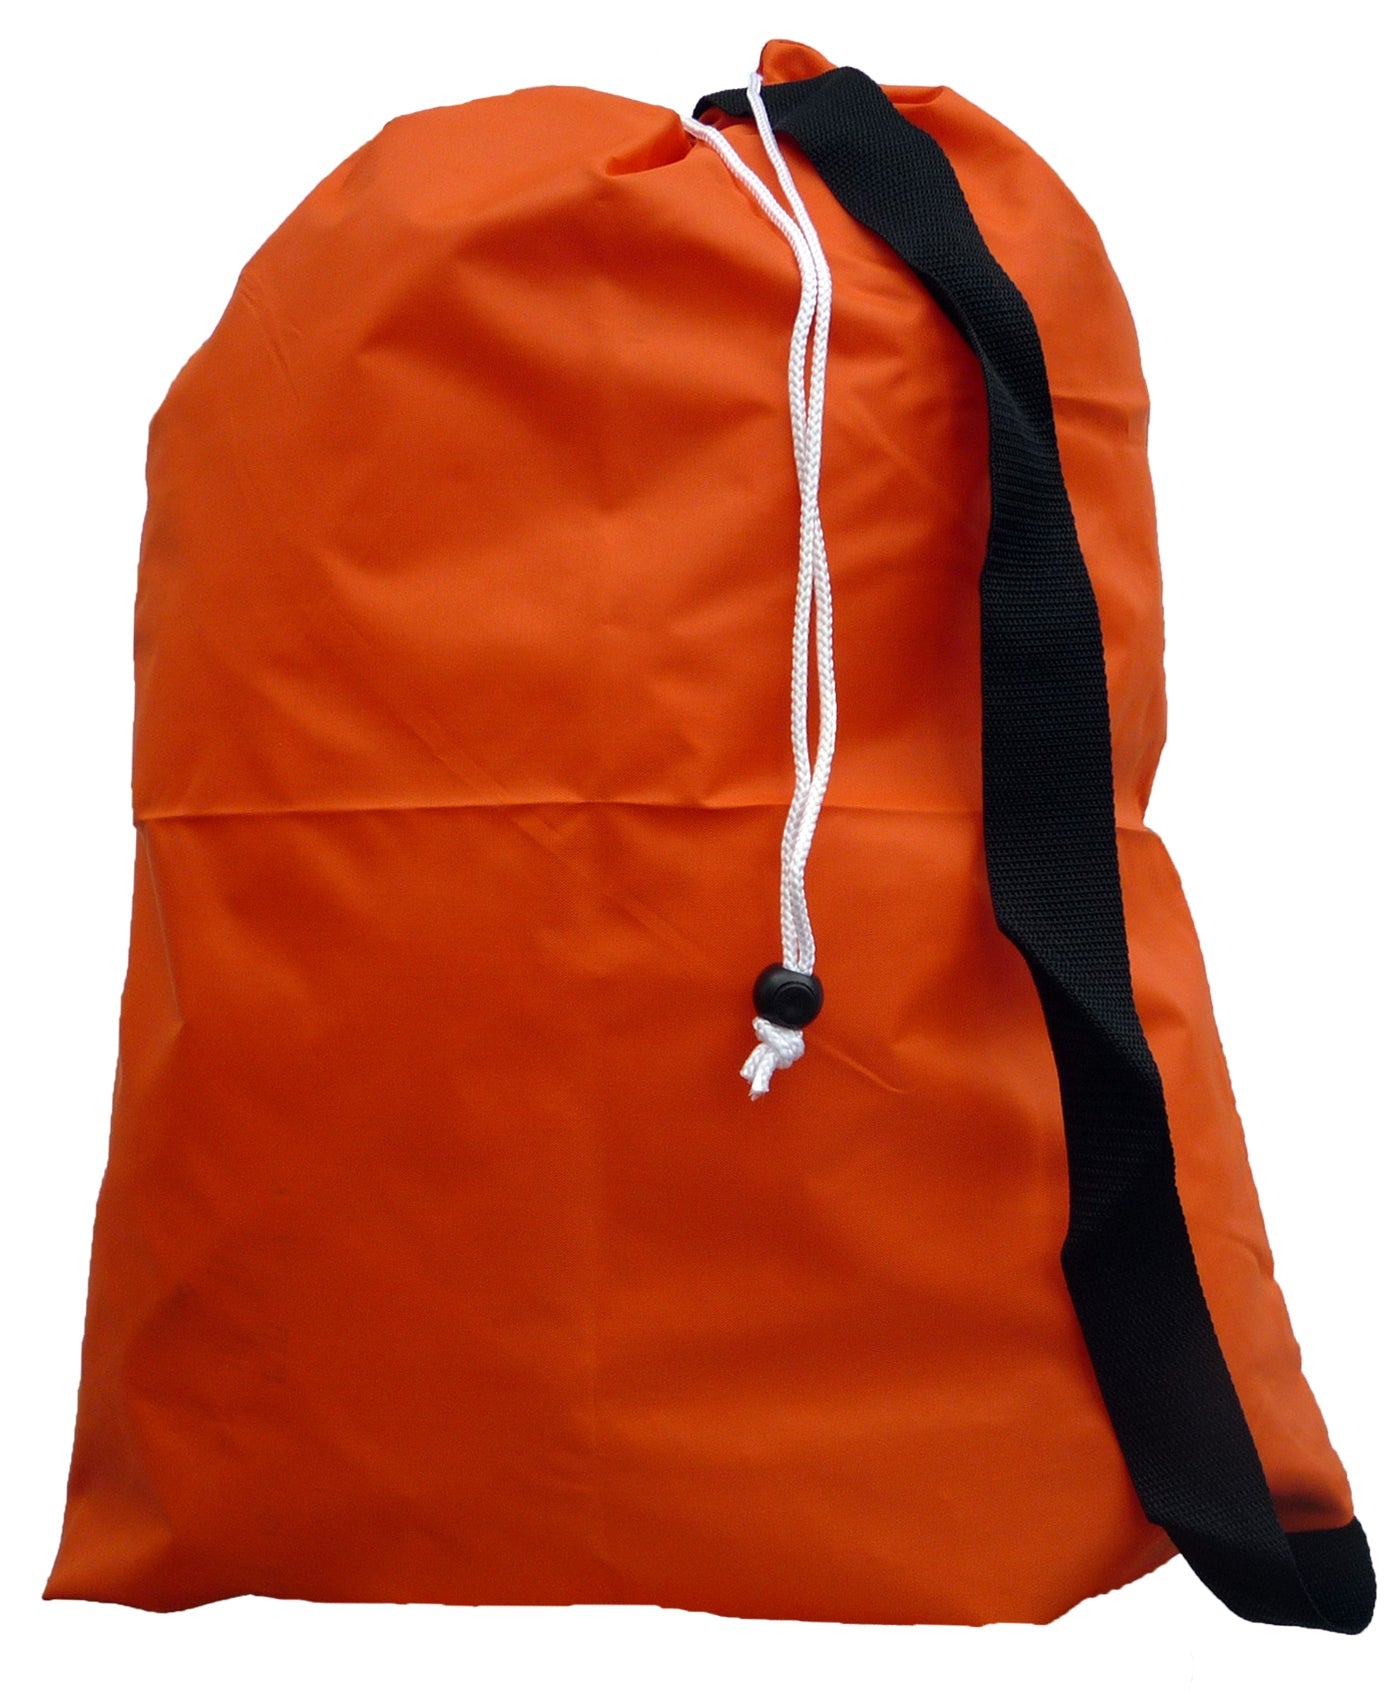 Medium Laundry Bag with Strap, Orange